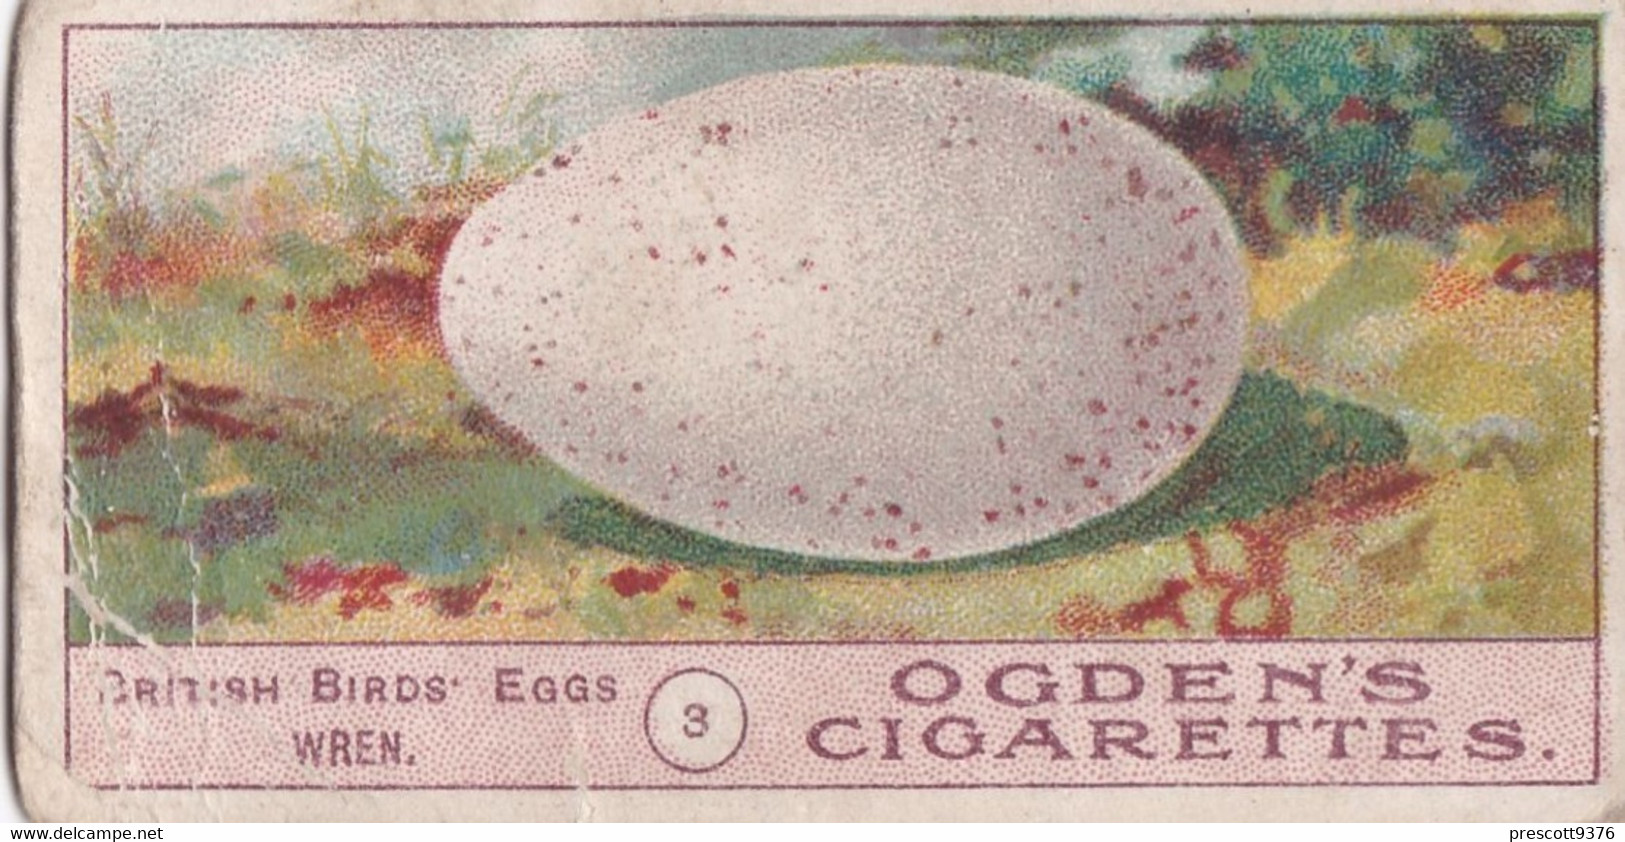 Birds Eggs 1908  - Ogdens  Cigarette Card - Original - Antique - 3 Wren - Ogden's